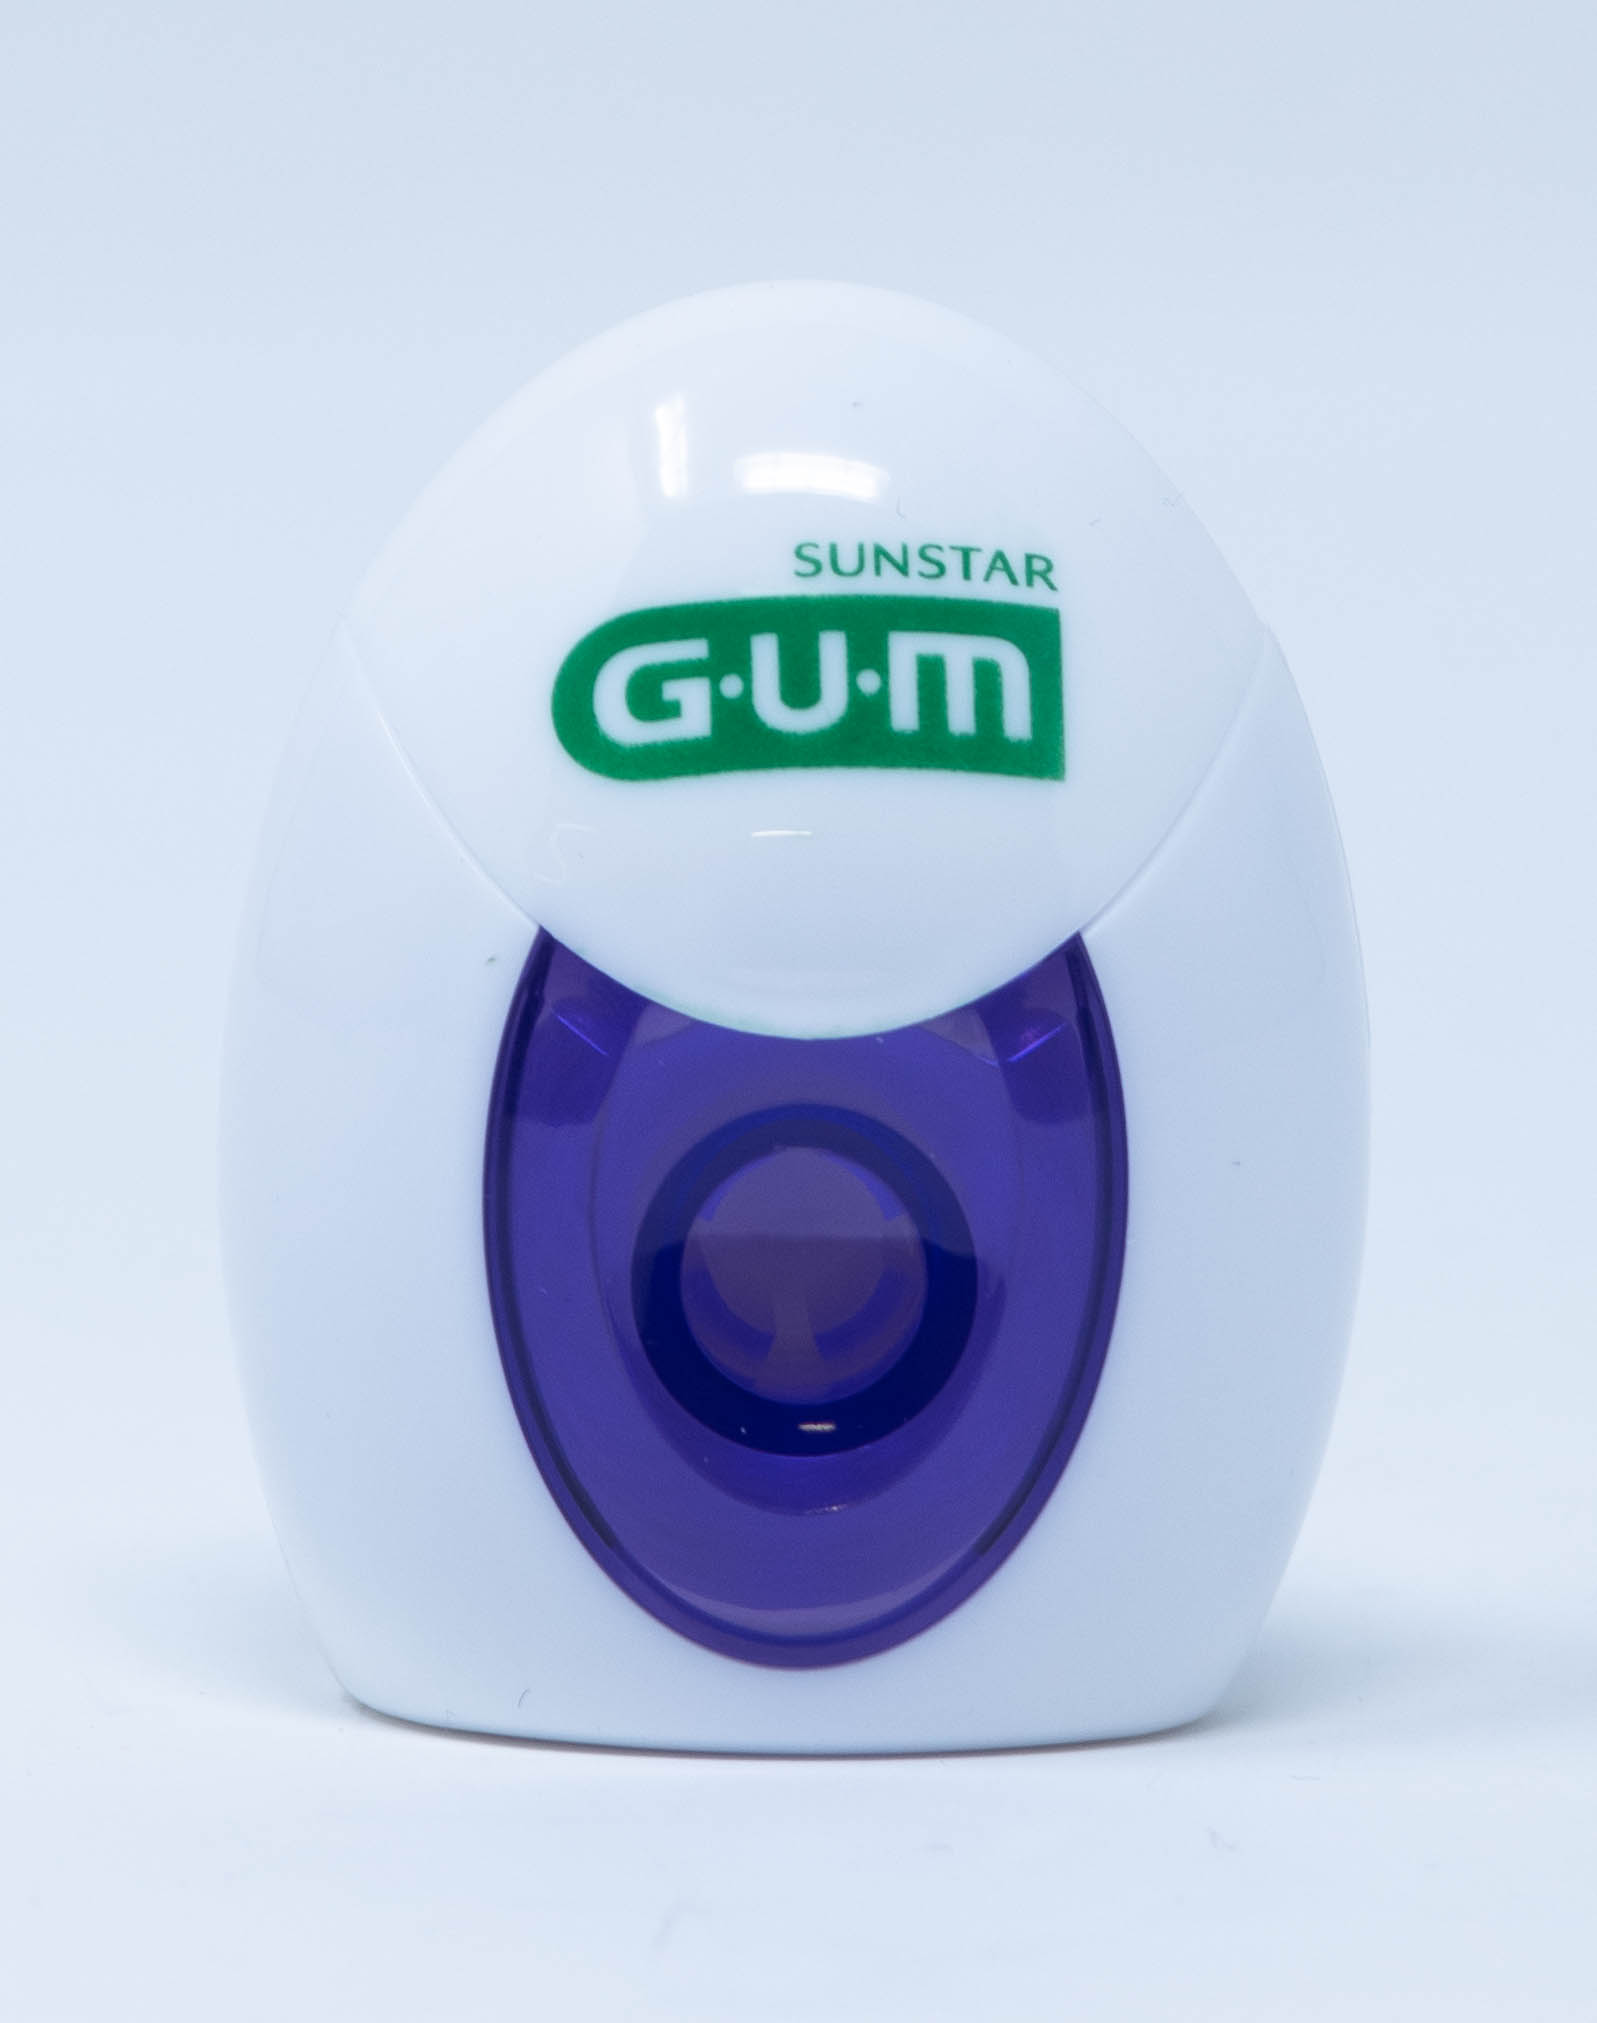 Gum Filo Interdentale Expanding Floss - 30 m | 2030